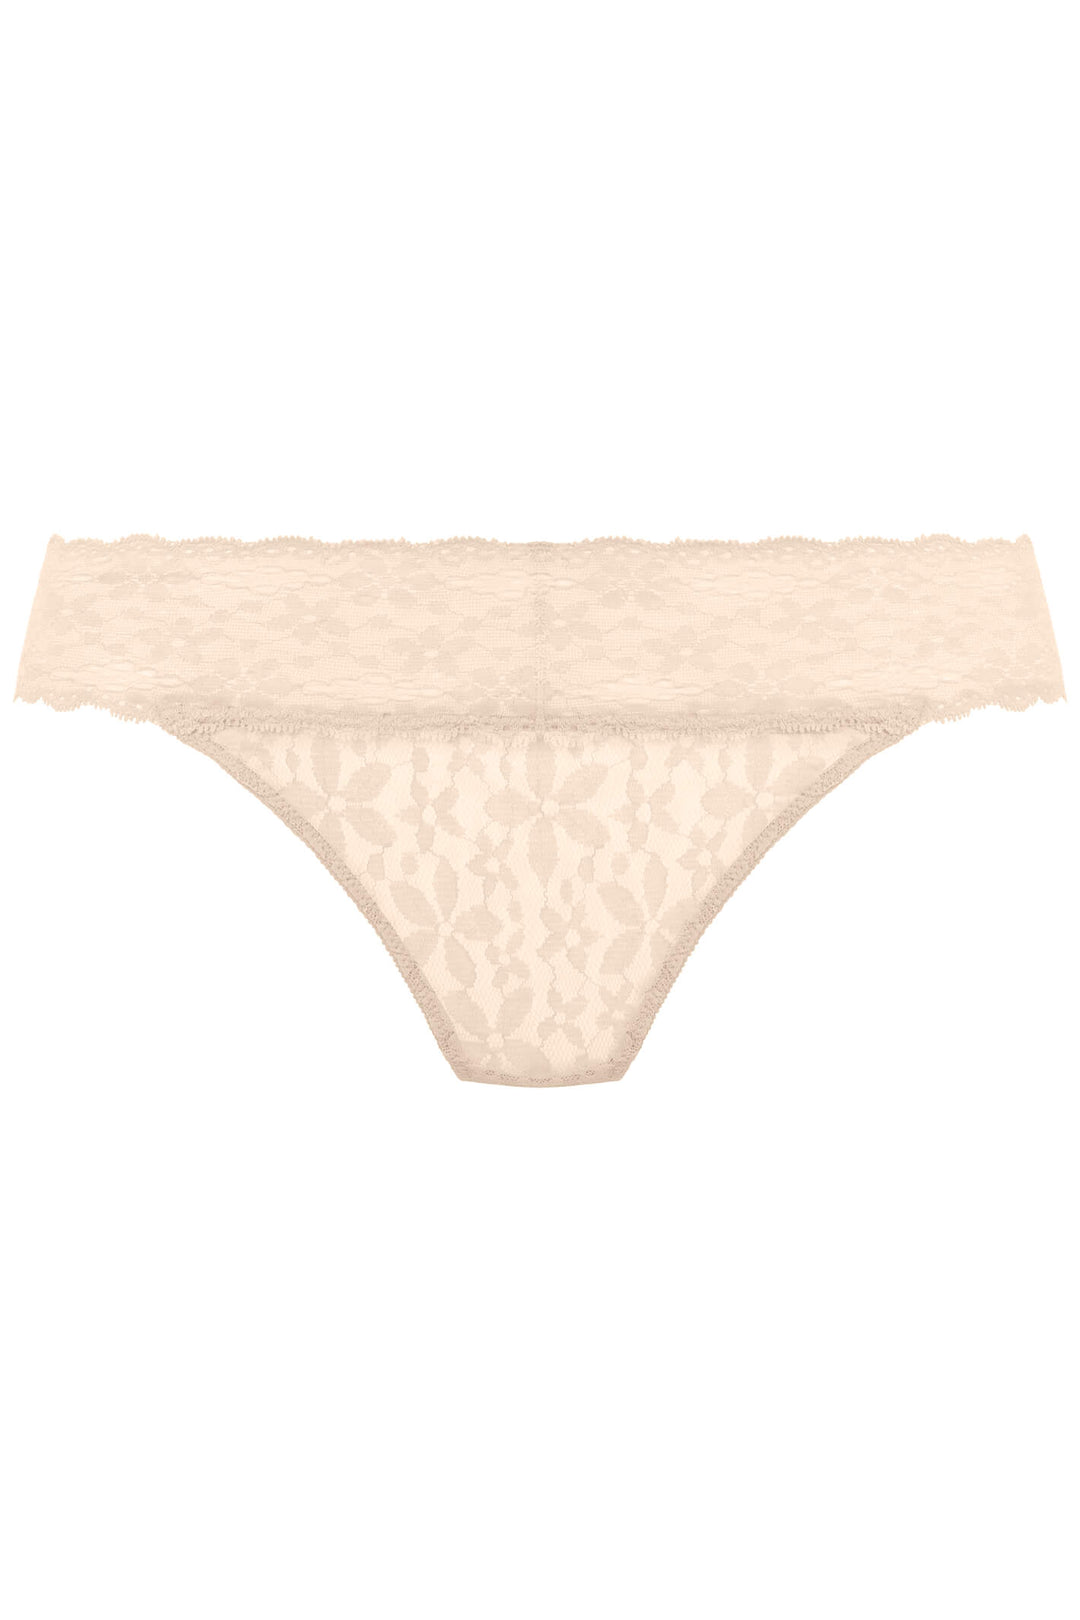 Wacoal WA878205NUE Nude Halo Lace Bikini Brief - Shirley Allum Boutique